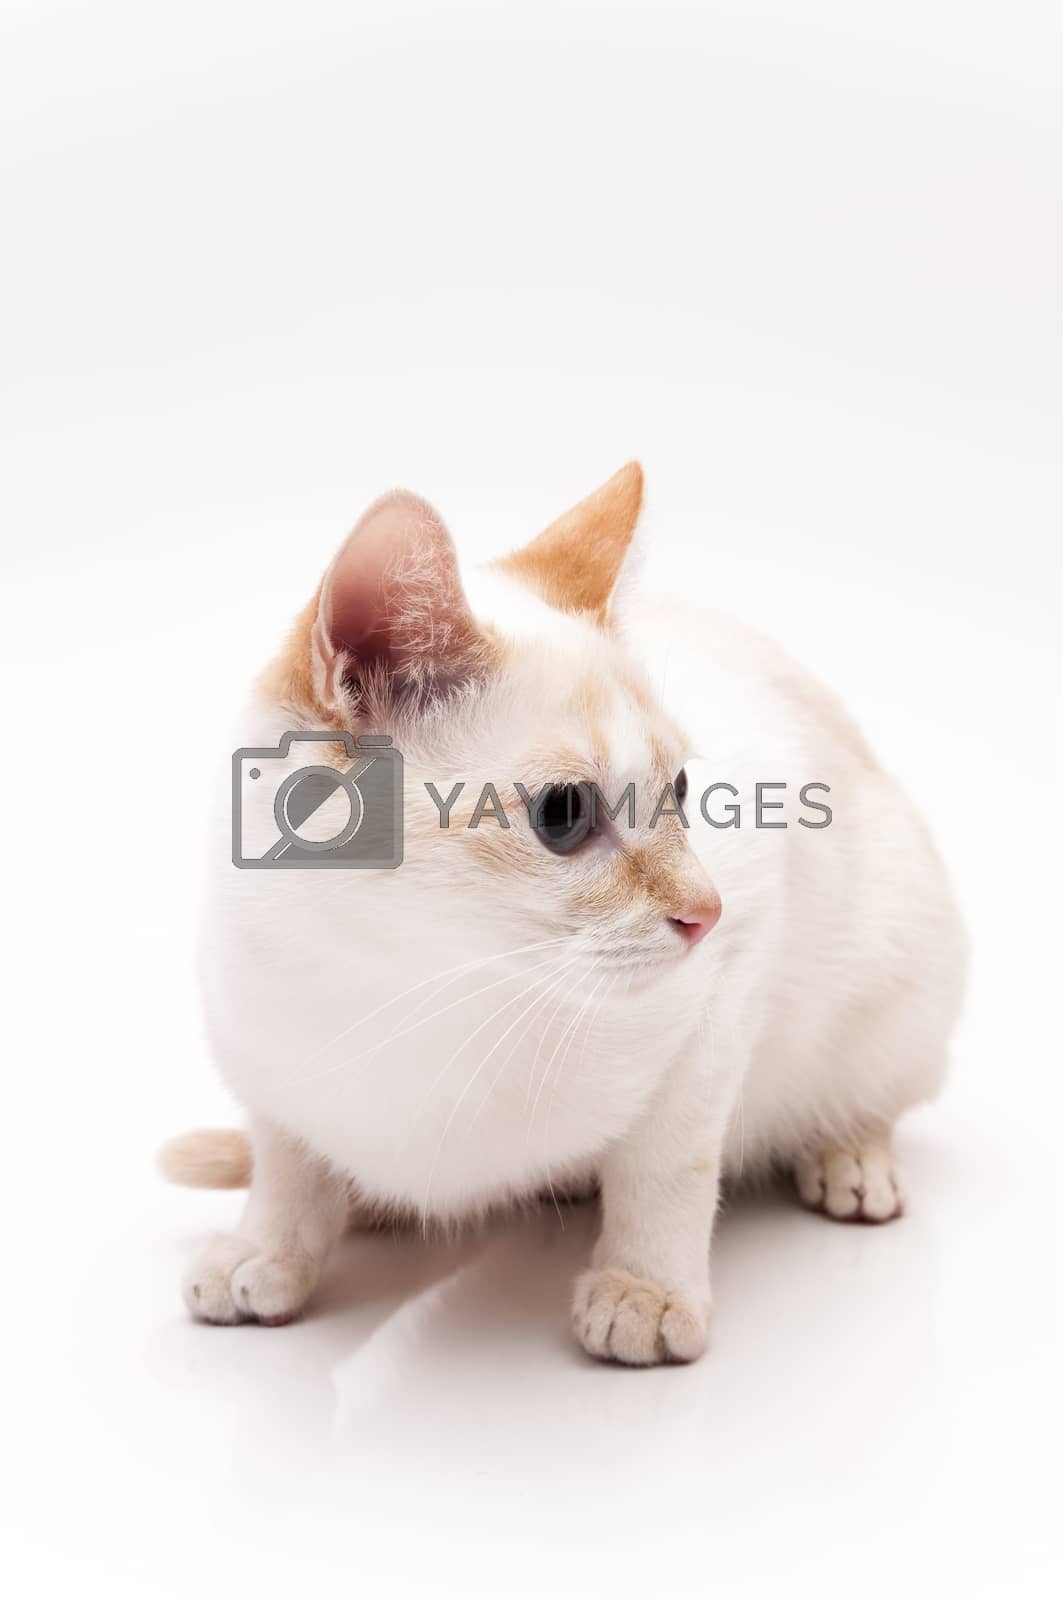 Royalty free image of white Cat by arnau2098